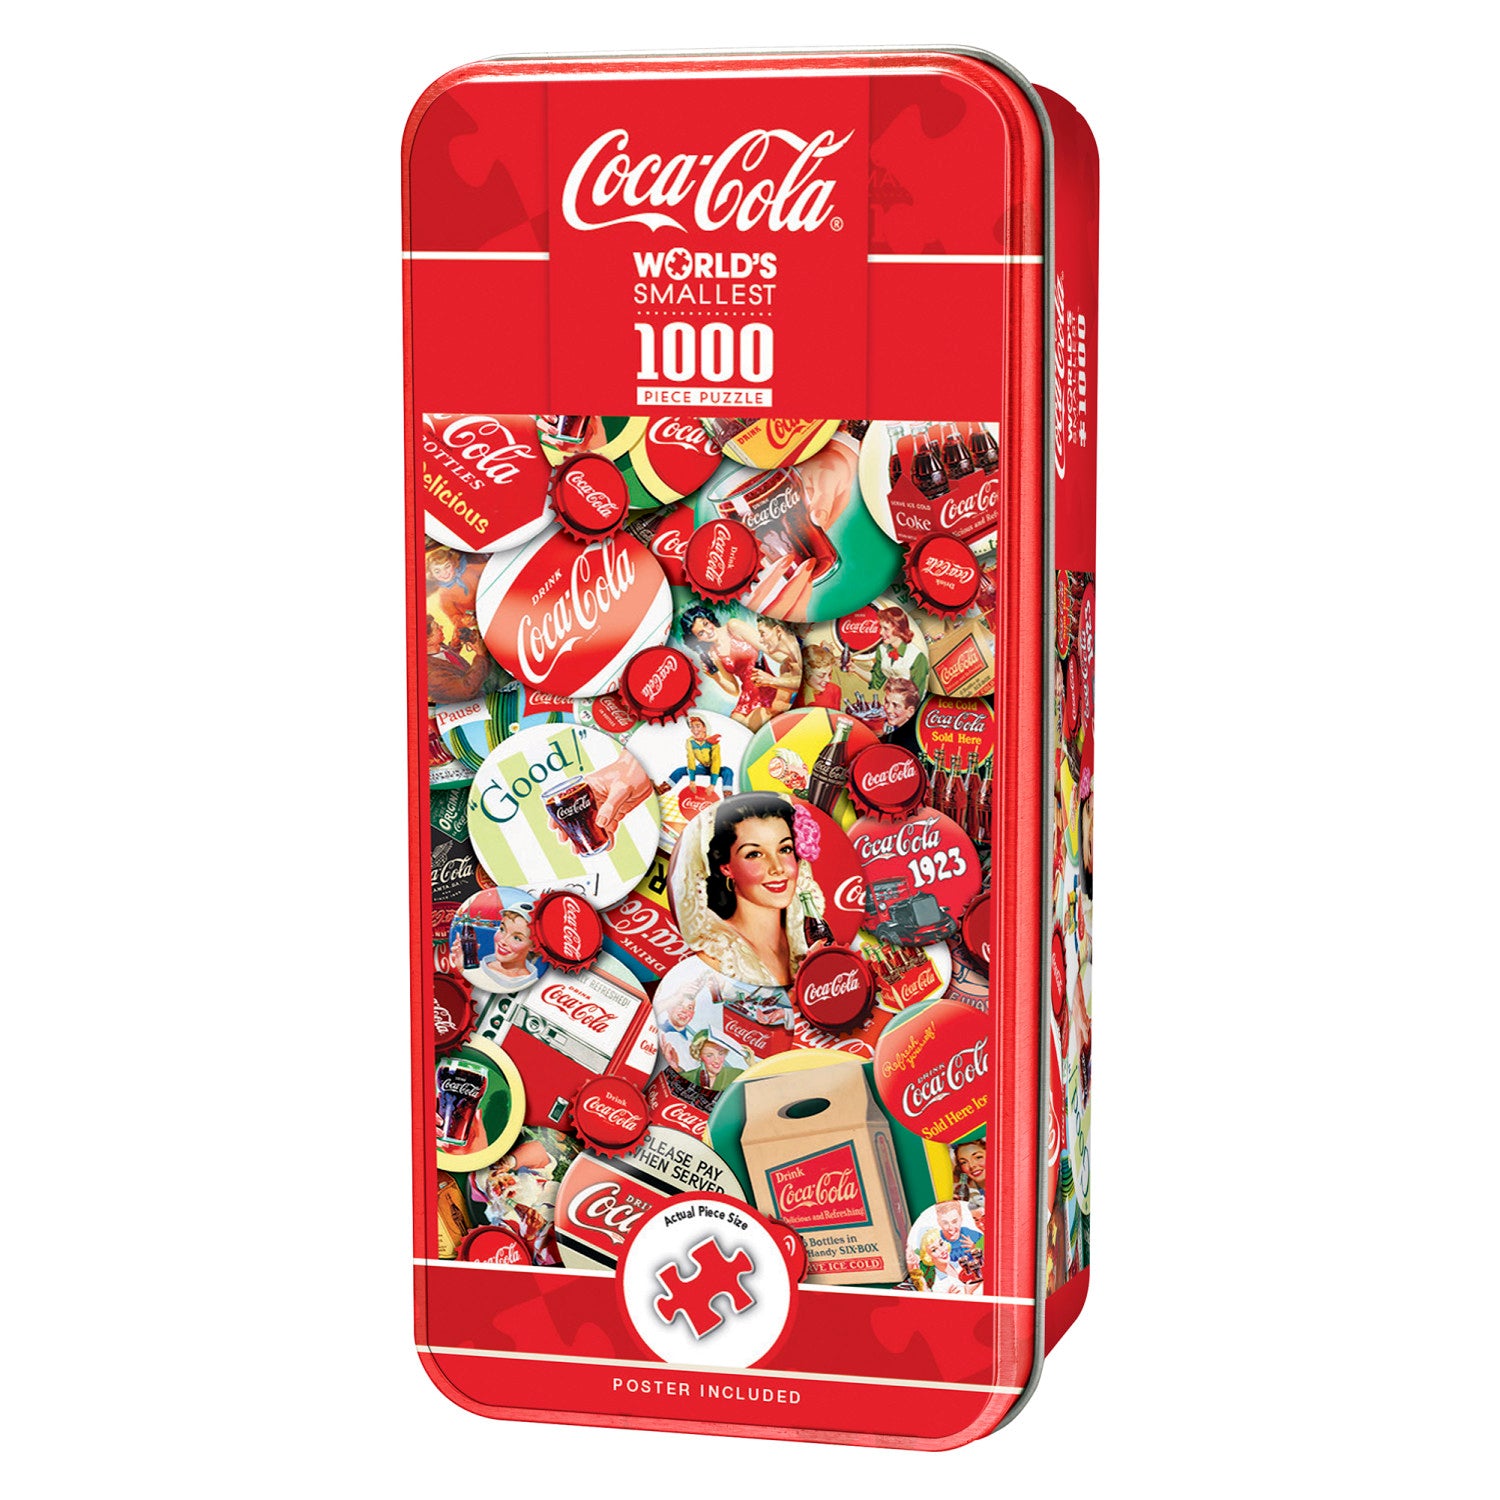 World's Smallest - Coca-Cola Caps 1000 Piece Puzzle